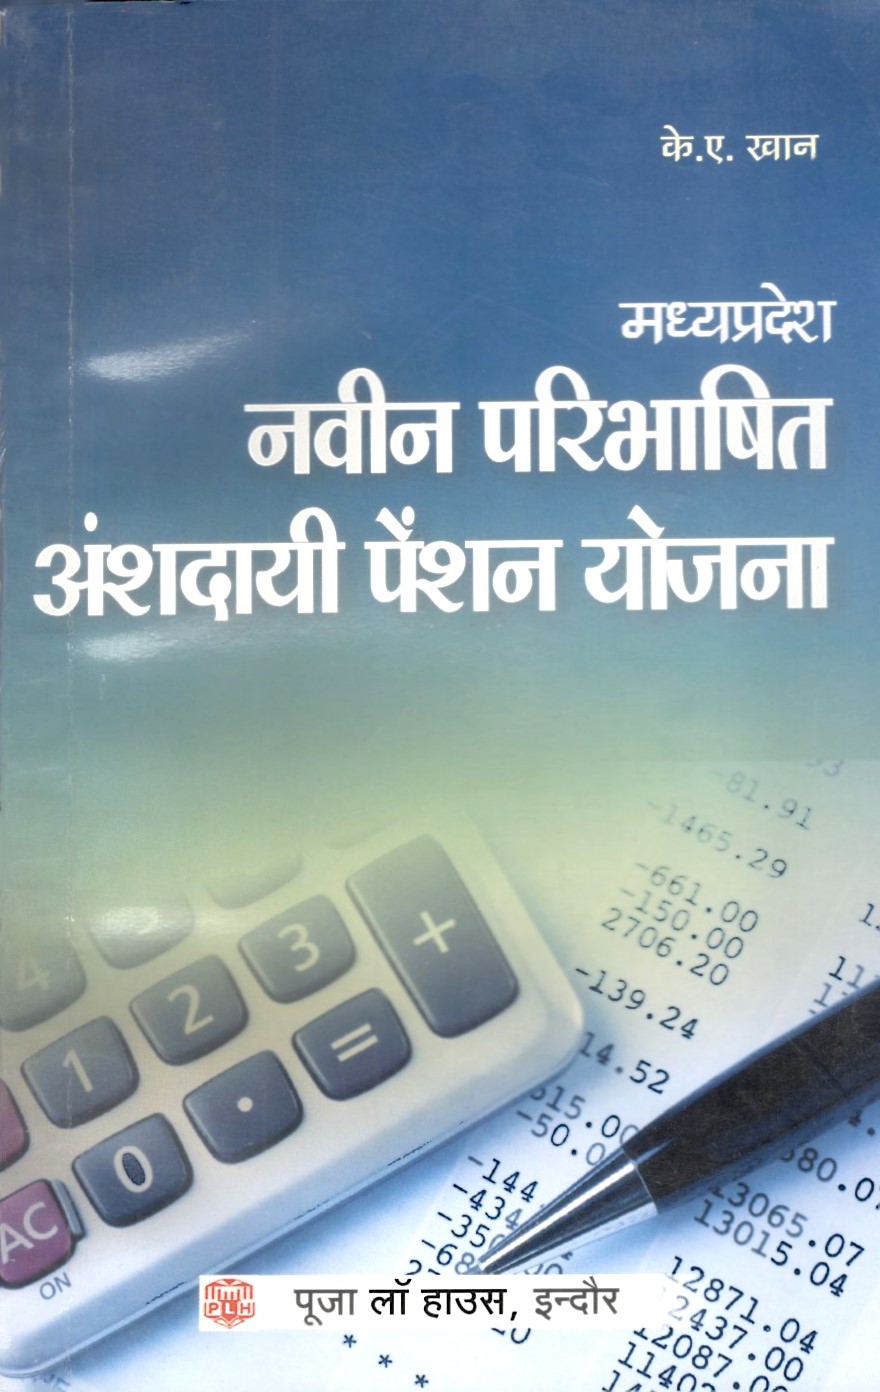 मध्य प्रदेश नवीन परिभाषित अंशदायी पेंशन योजना / Madhya Pradesh Newly Defined Contributory Pension Scheme